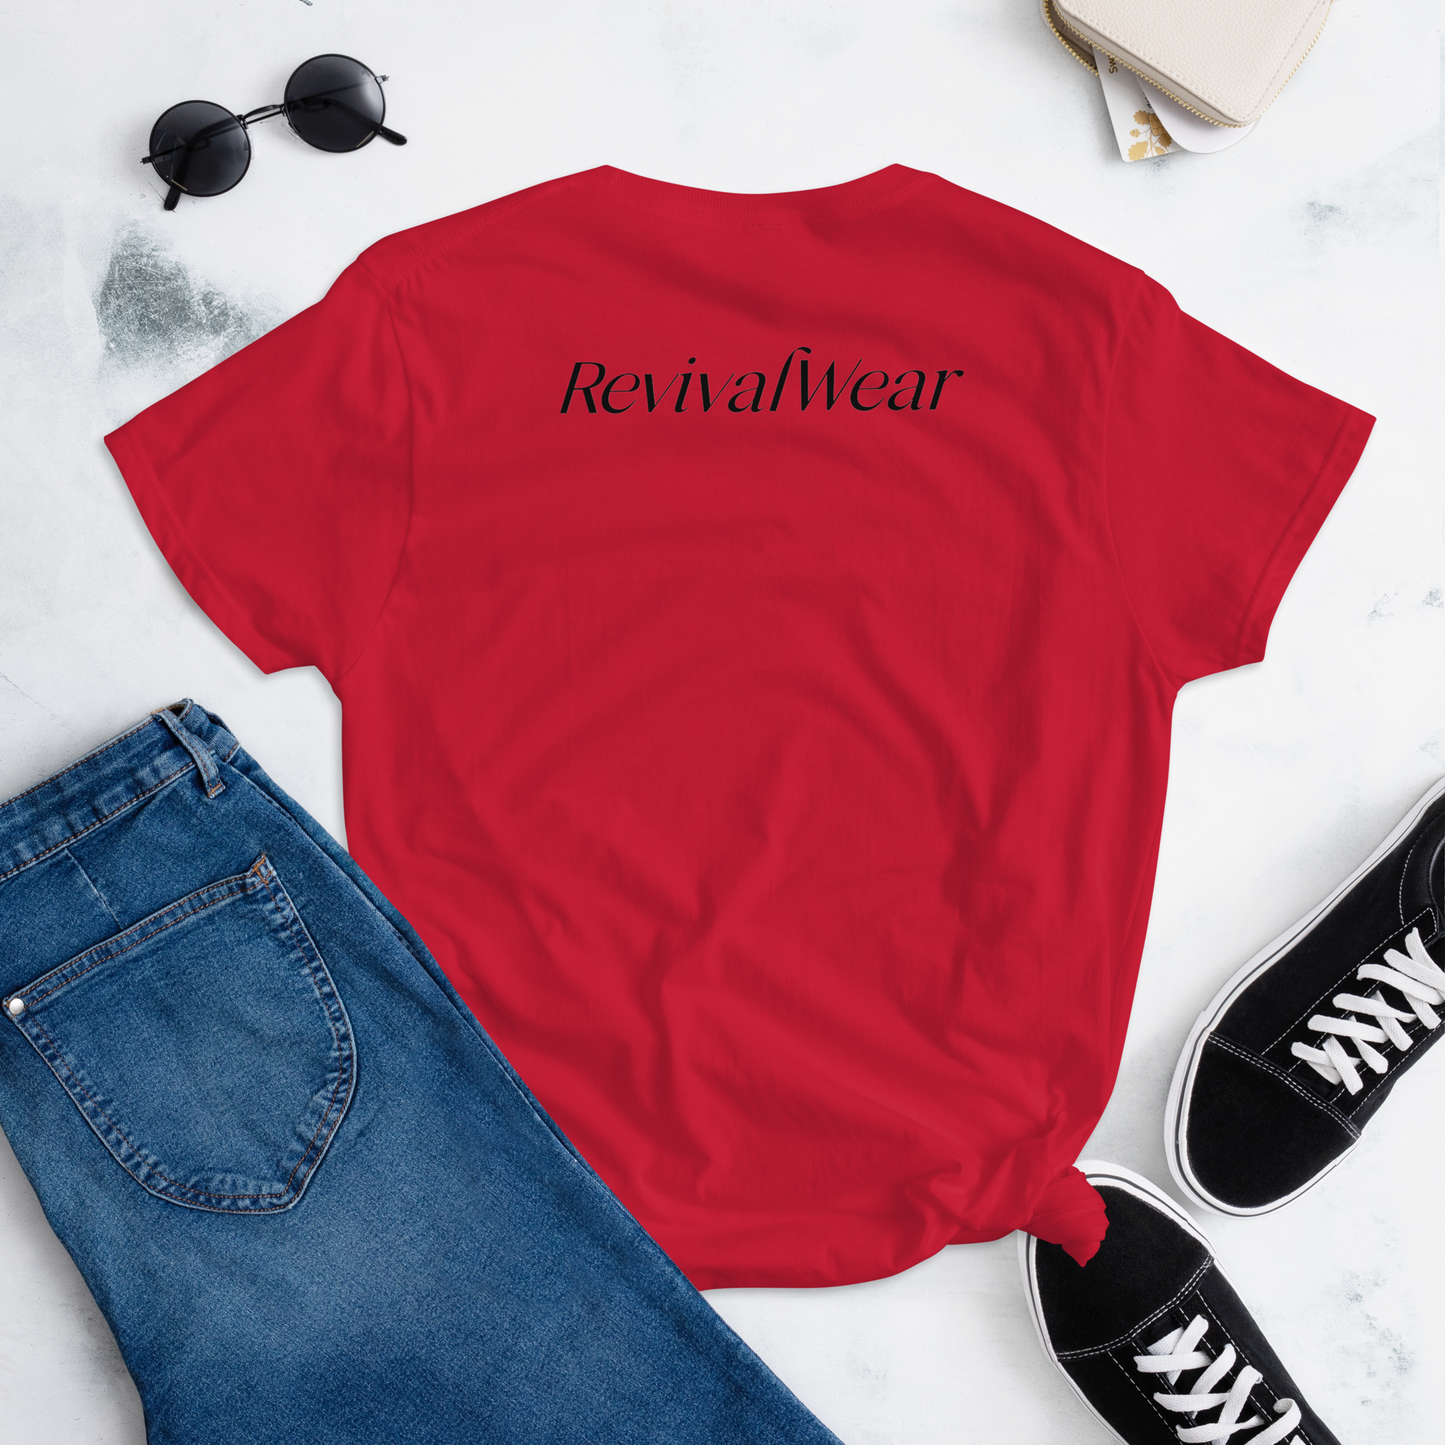 RevivalWear Women's short sleeve t-shirt